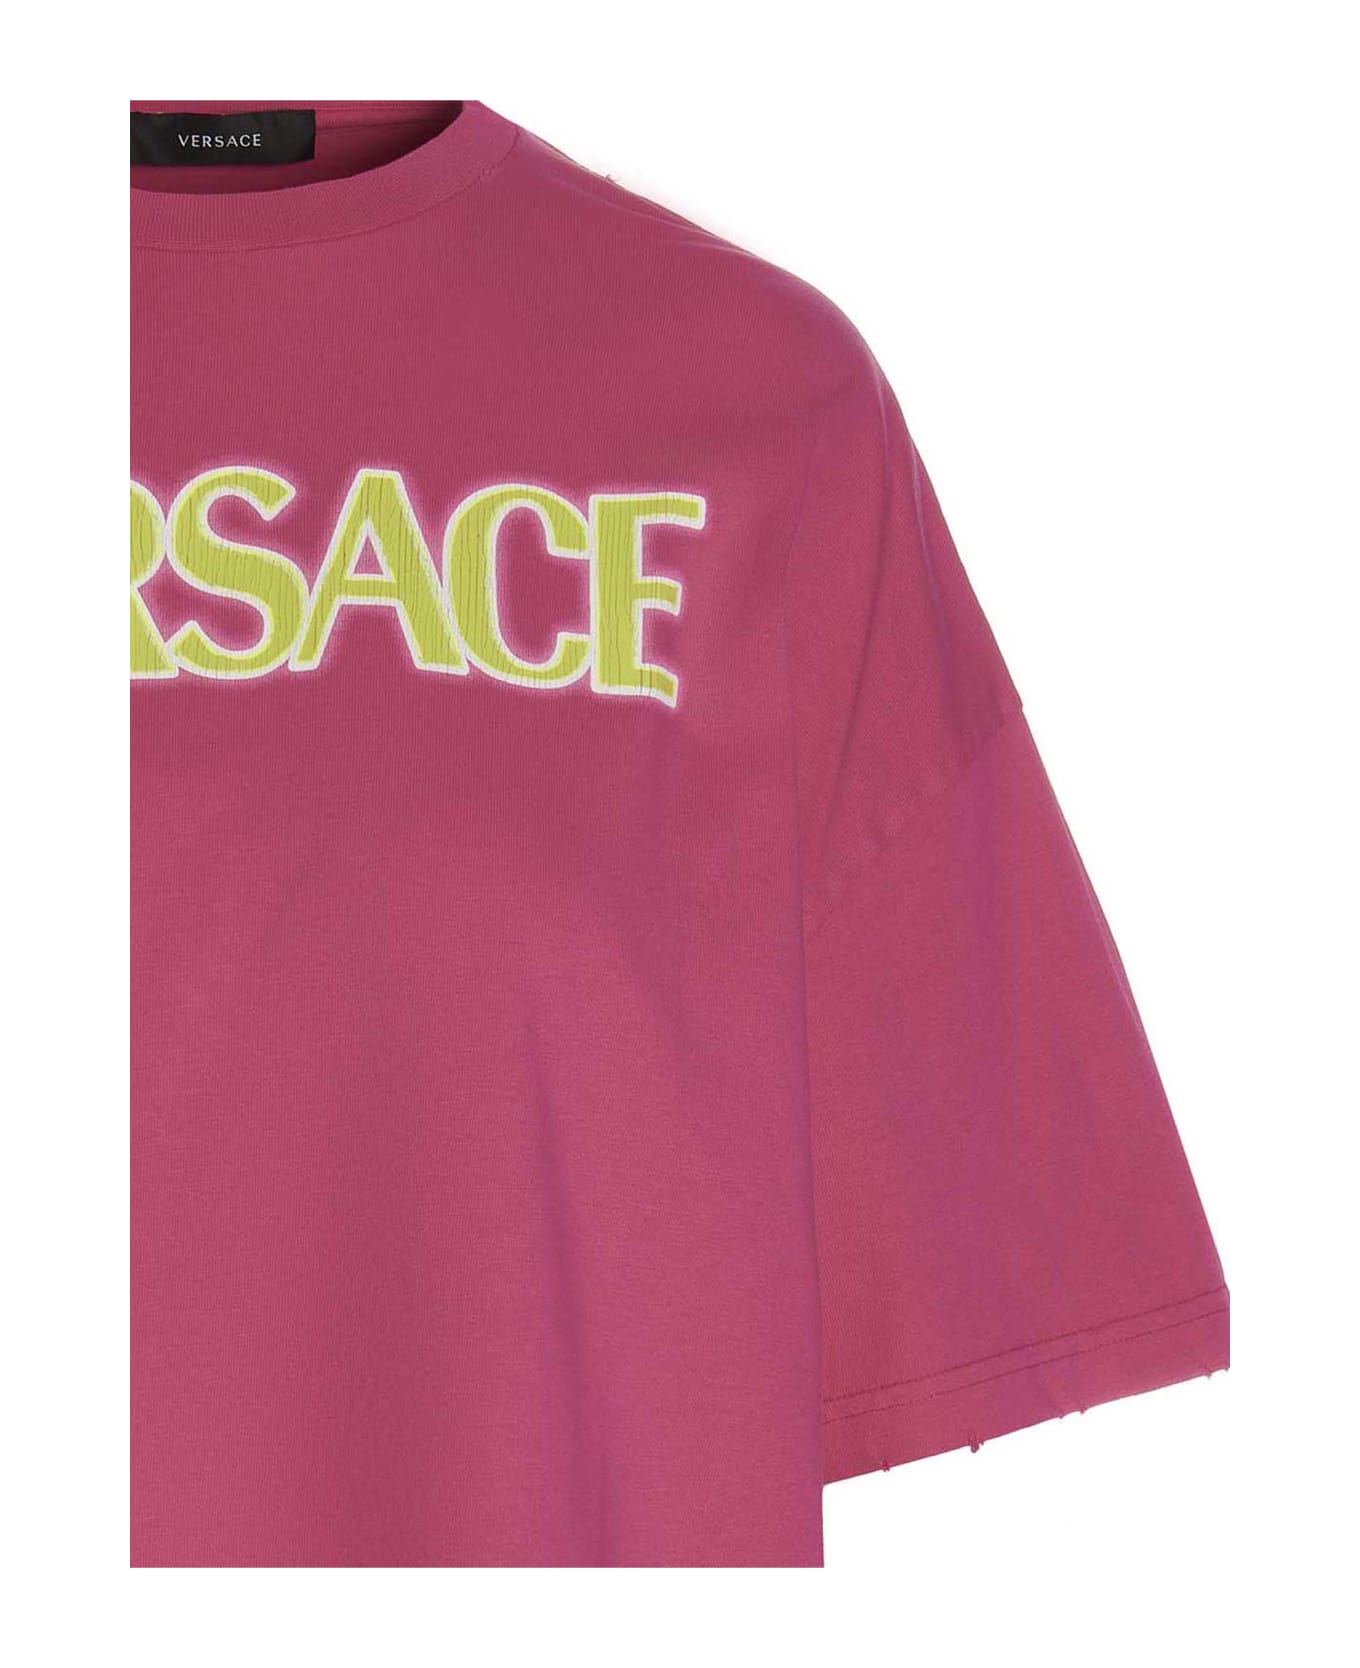 Versace Logo T-shirt - Fuchsia